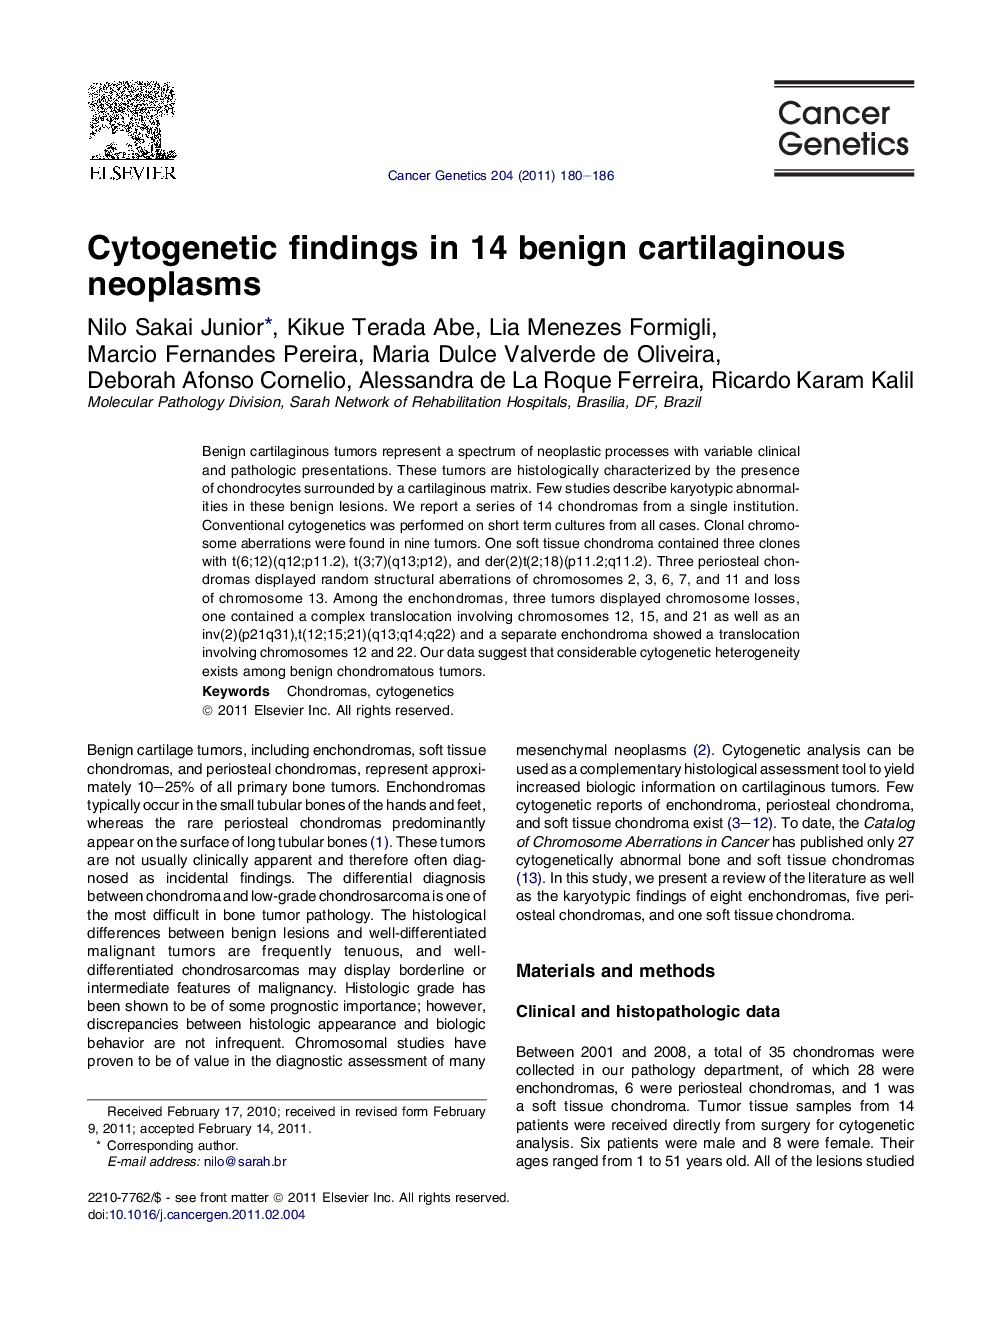 Cytogenetic findings in 14 benign cartilaginous neoplasms